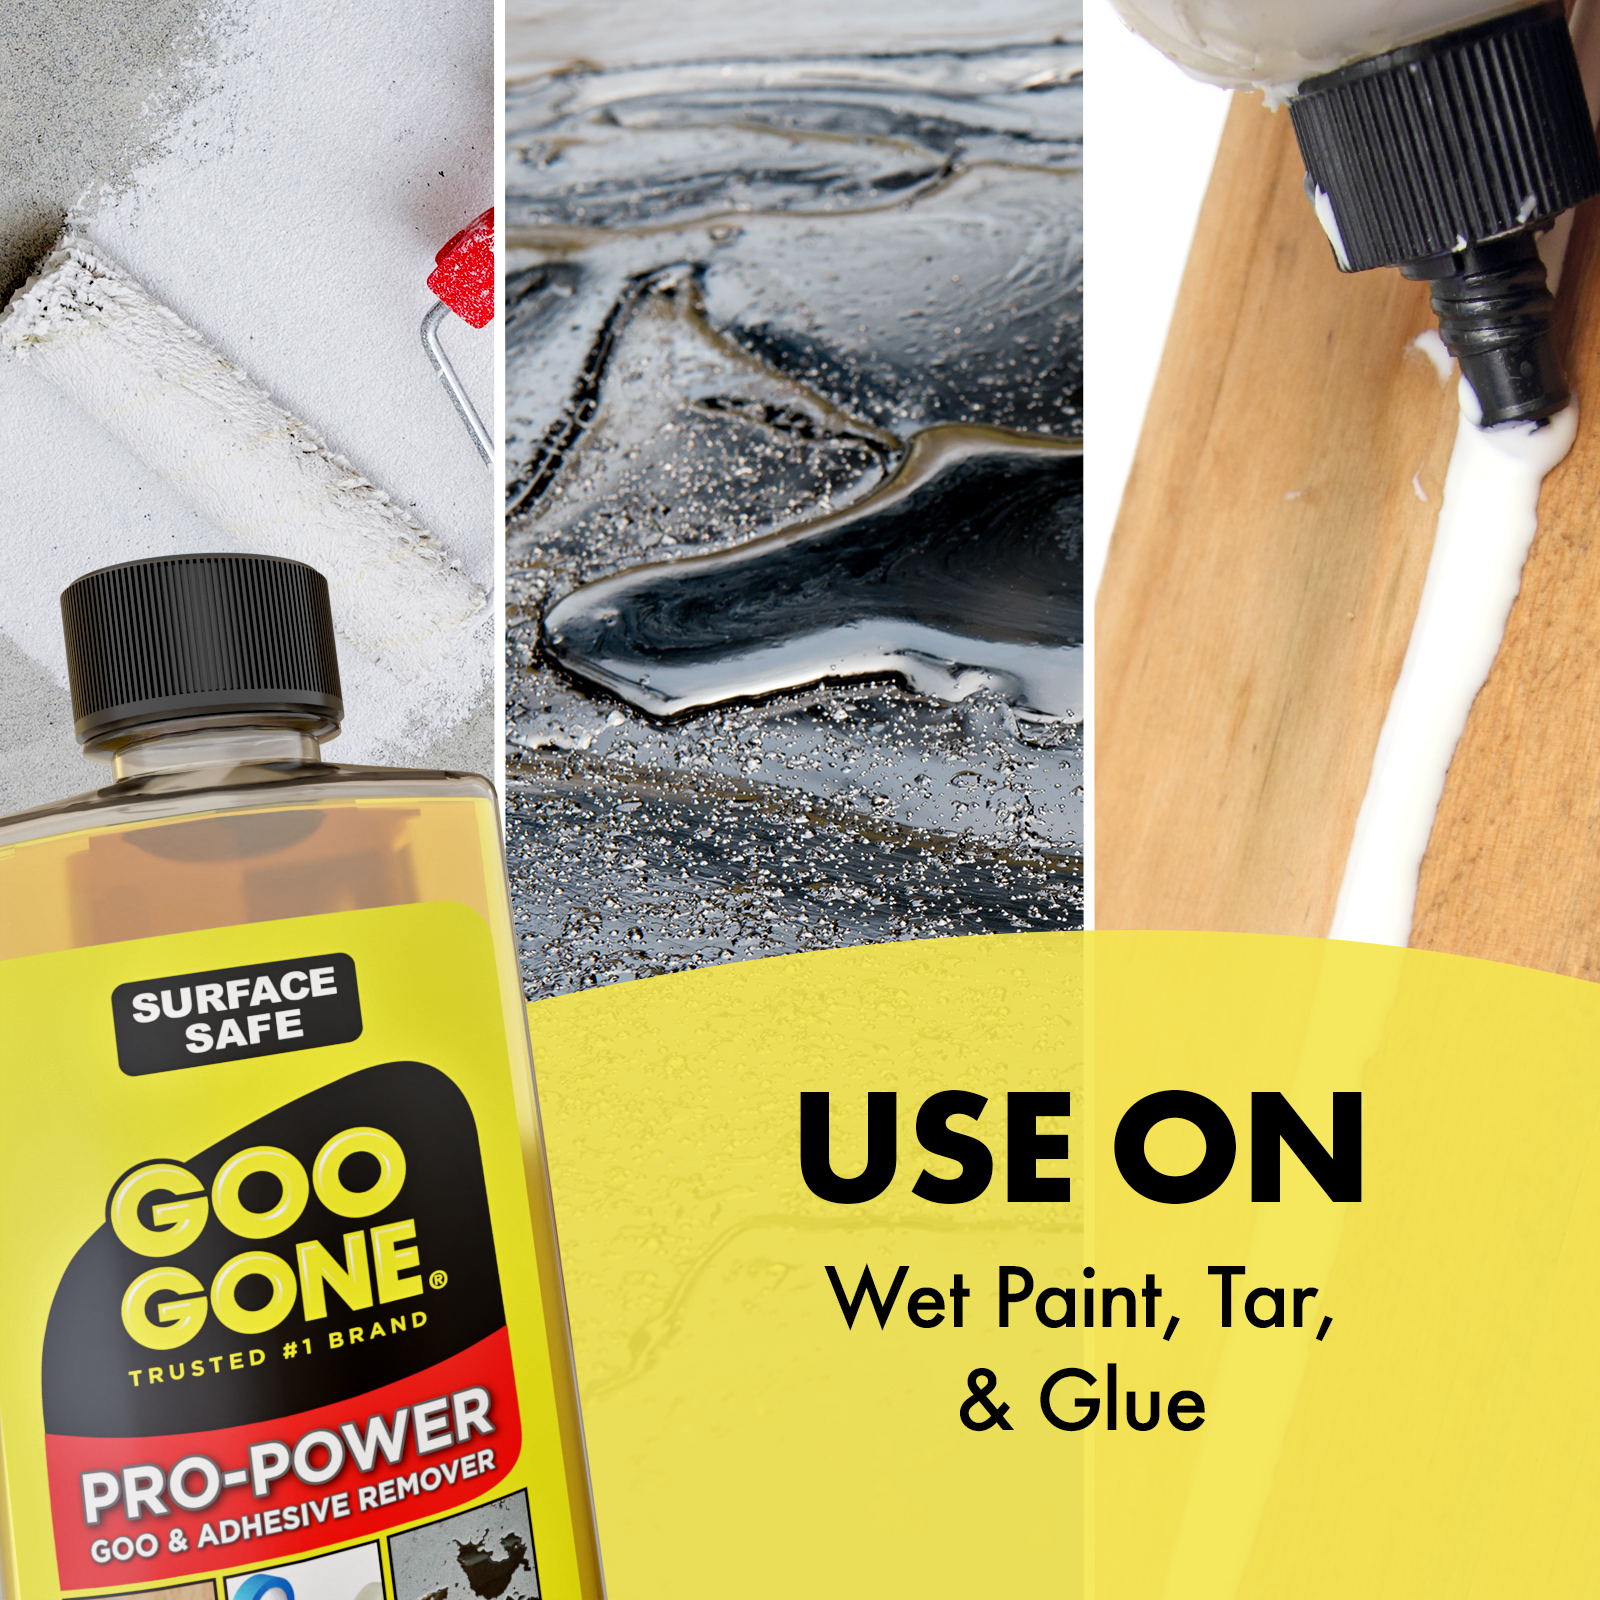 Goo Gone Pro-Power Adhesive, Grease & Tar Remover Spray, Orange Citrus Scent, 16 oz - image 5 of 7